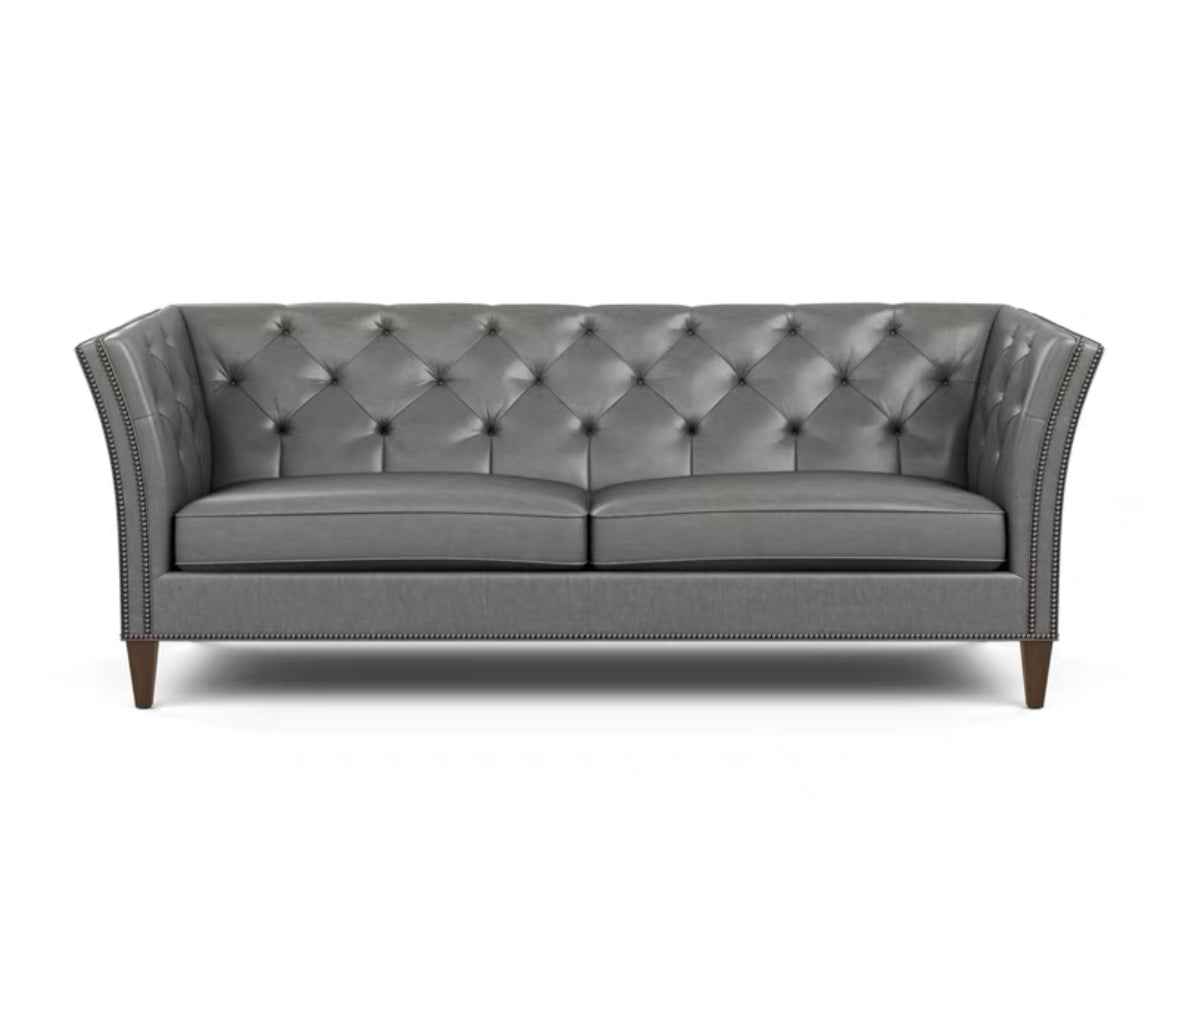 YANNIK Indoor Fabric Sofa. Customisable